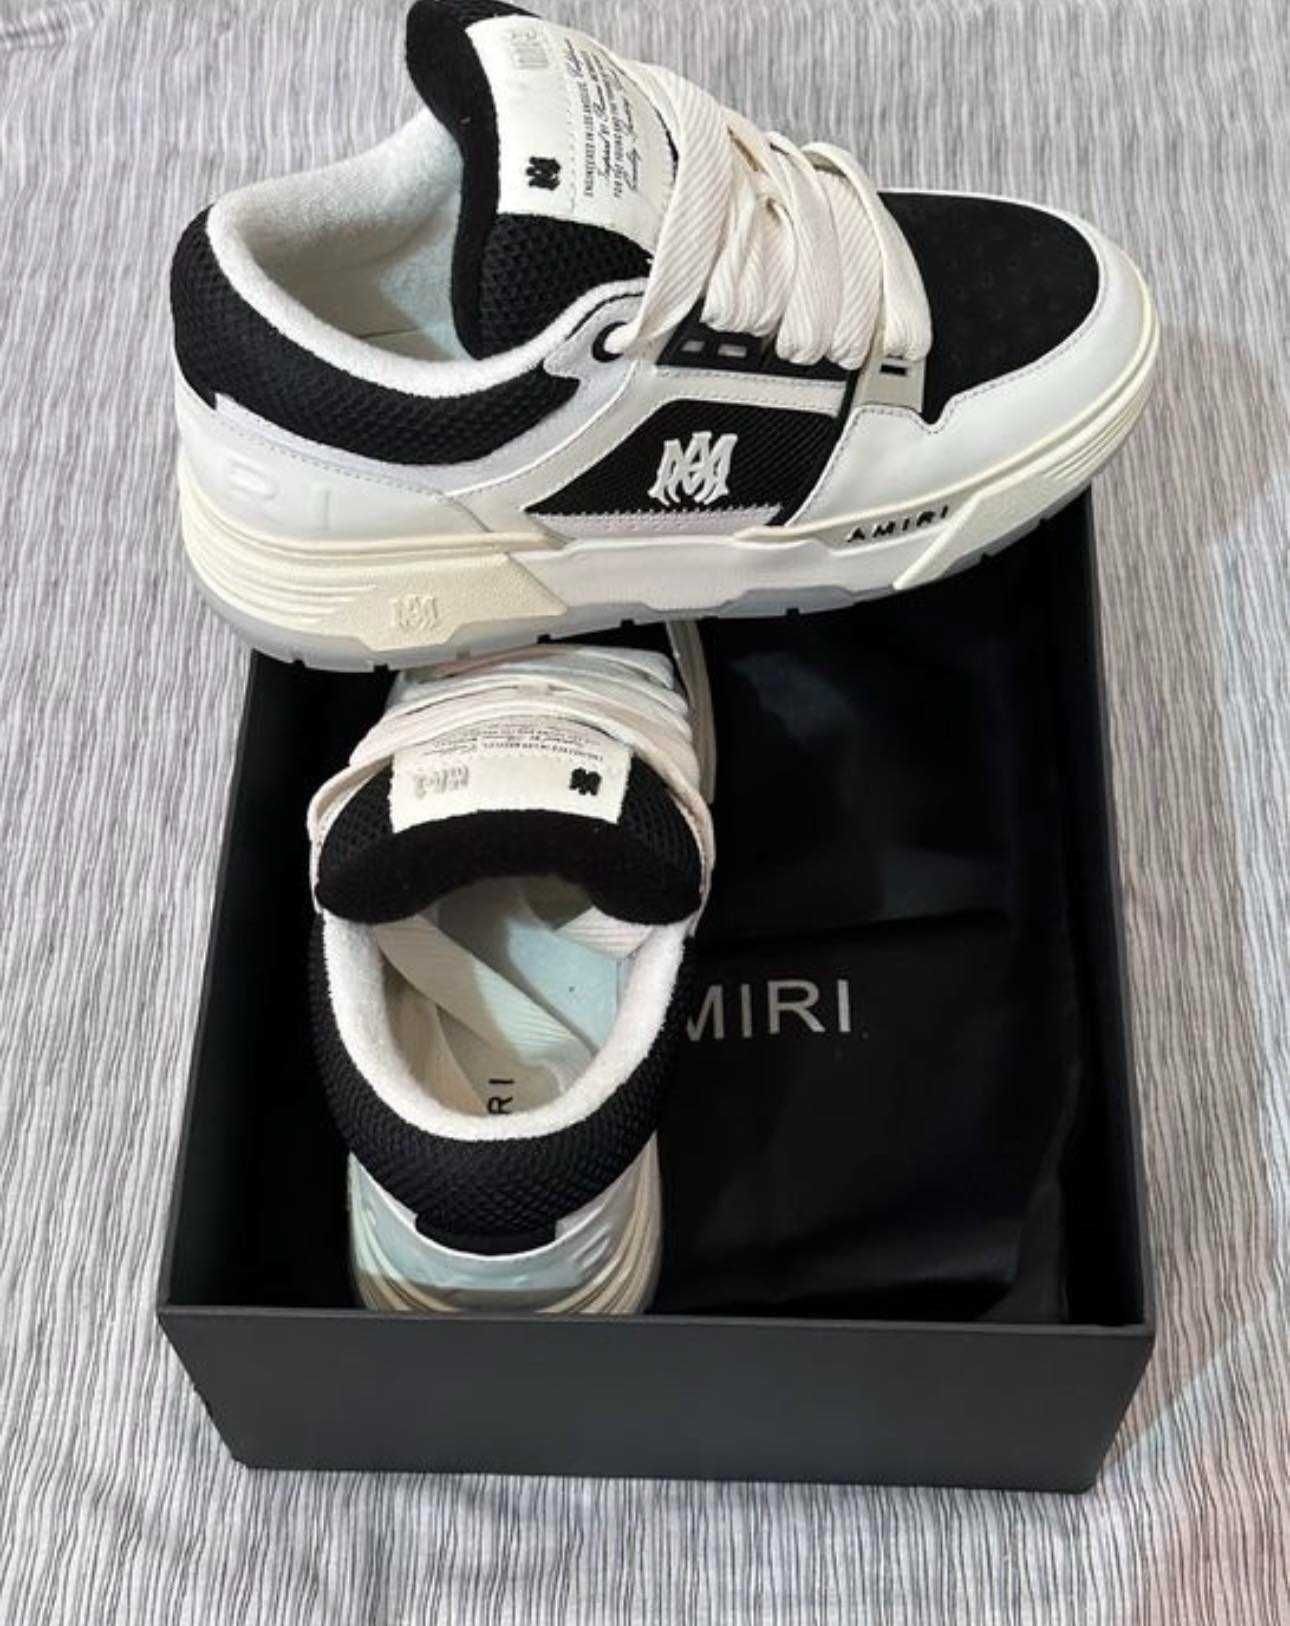 Adidasi AMIRI MA-1 Black&White (Livrare cu verificare)